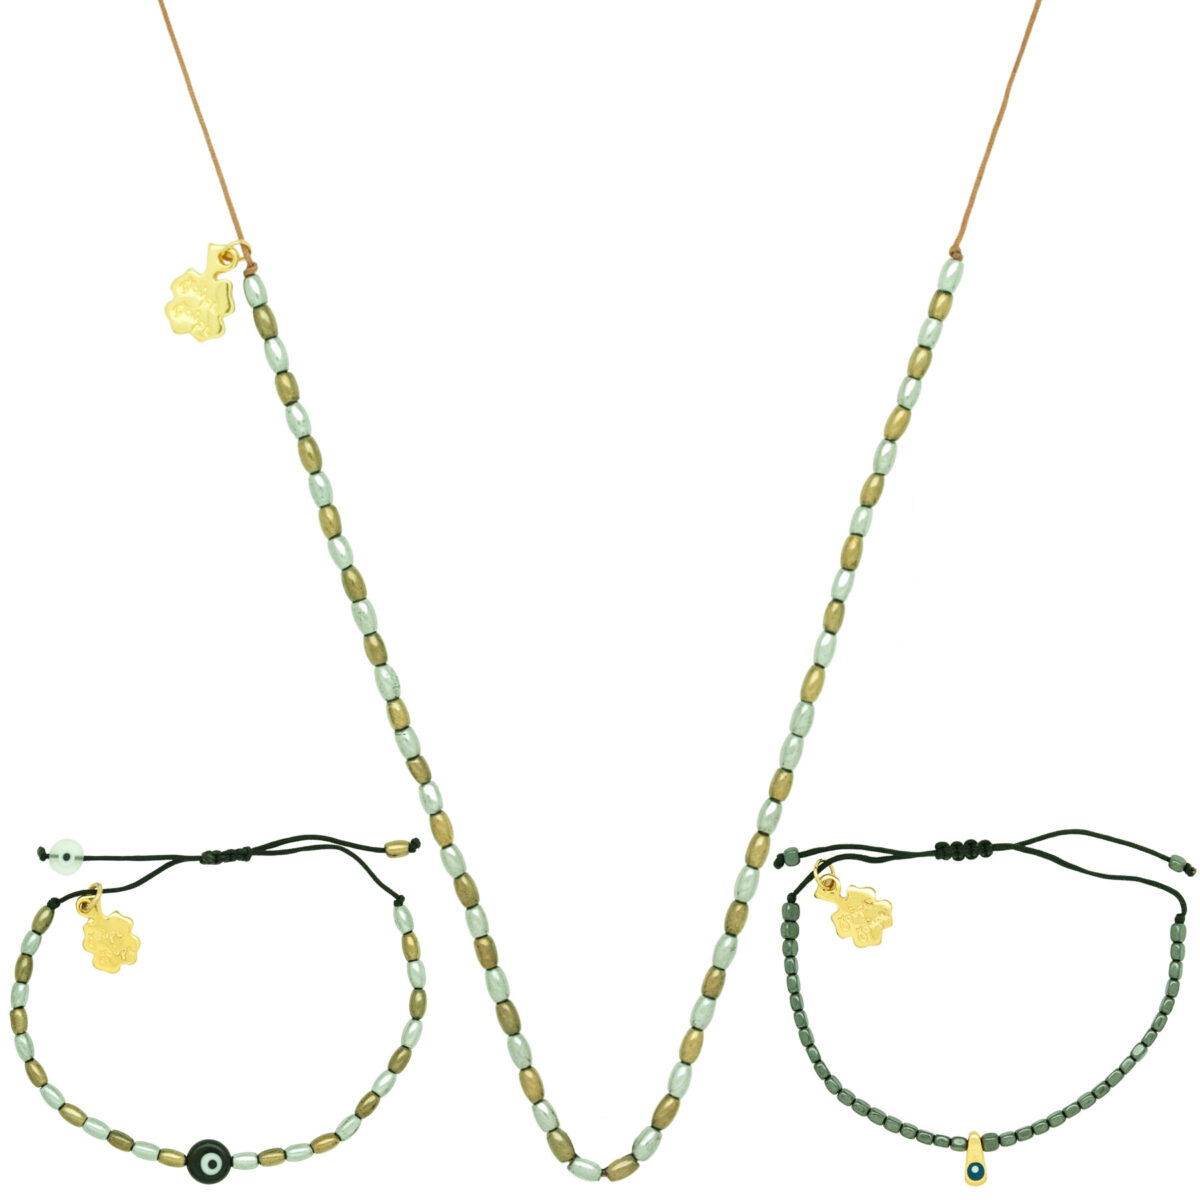 hematite necklace and bracelet set